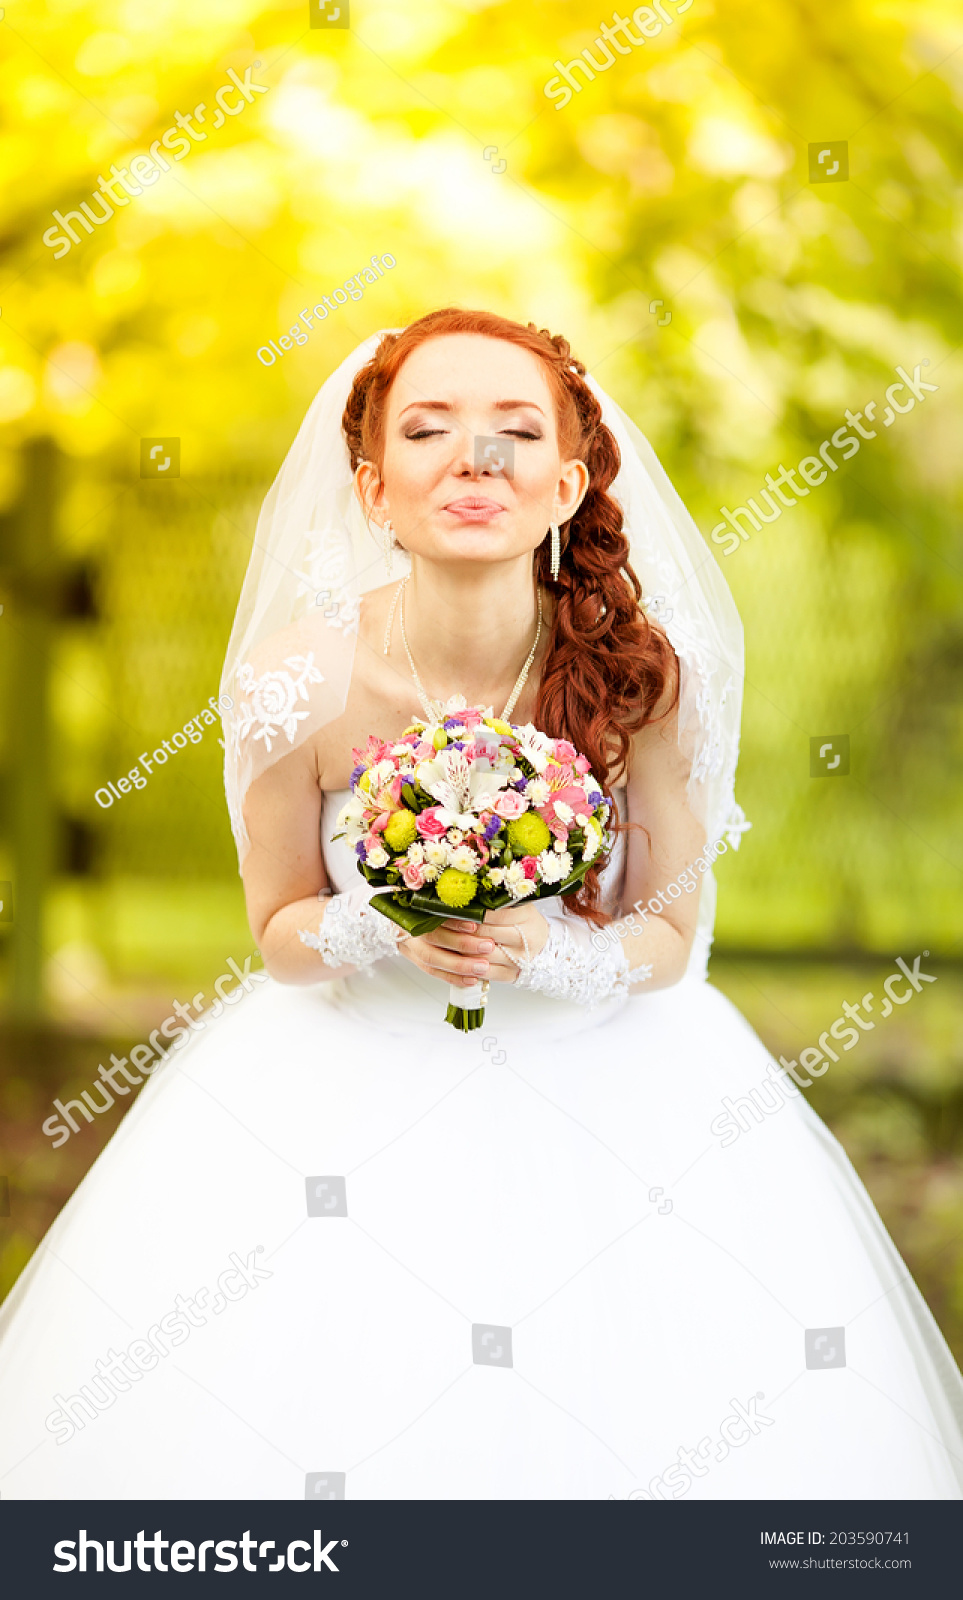 Beautiful Bride Photos Shutterstock 79